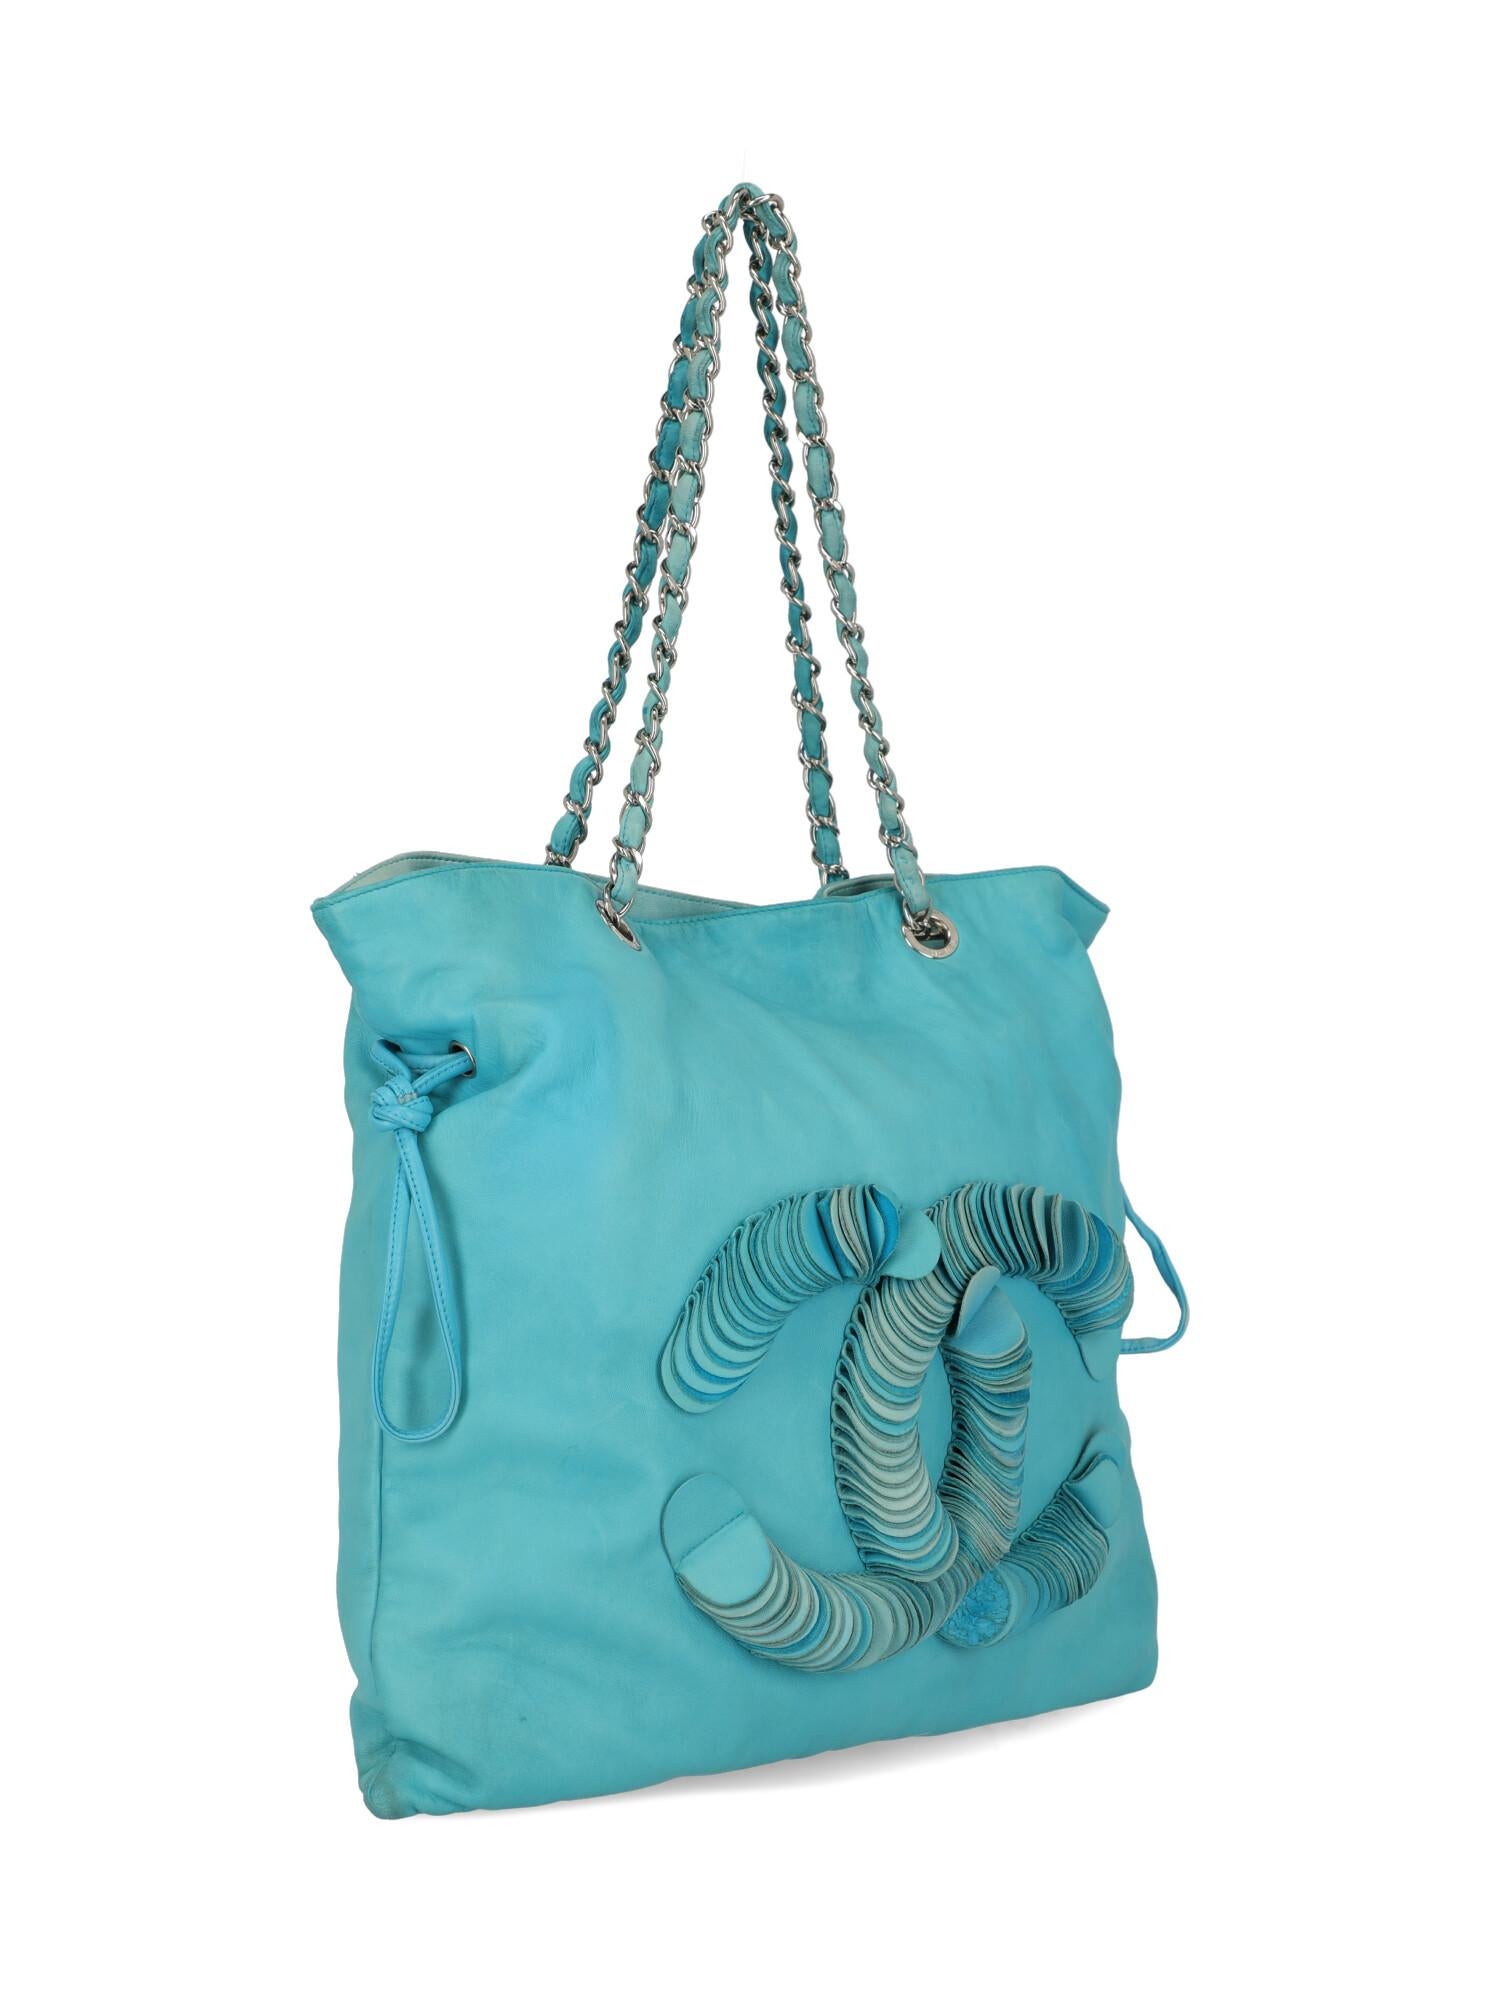 blue chanel tote bag